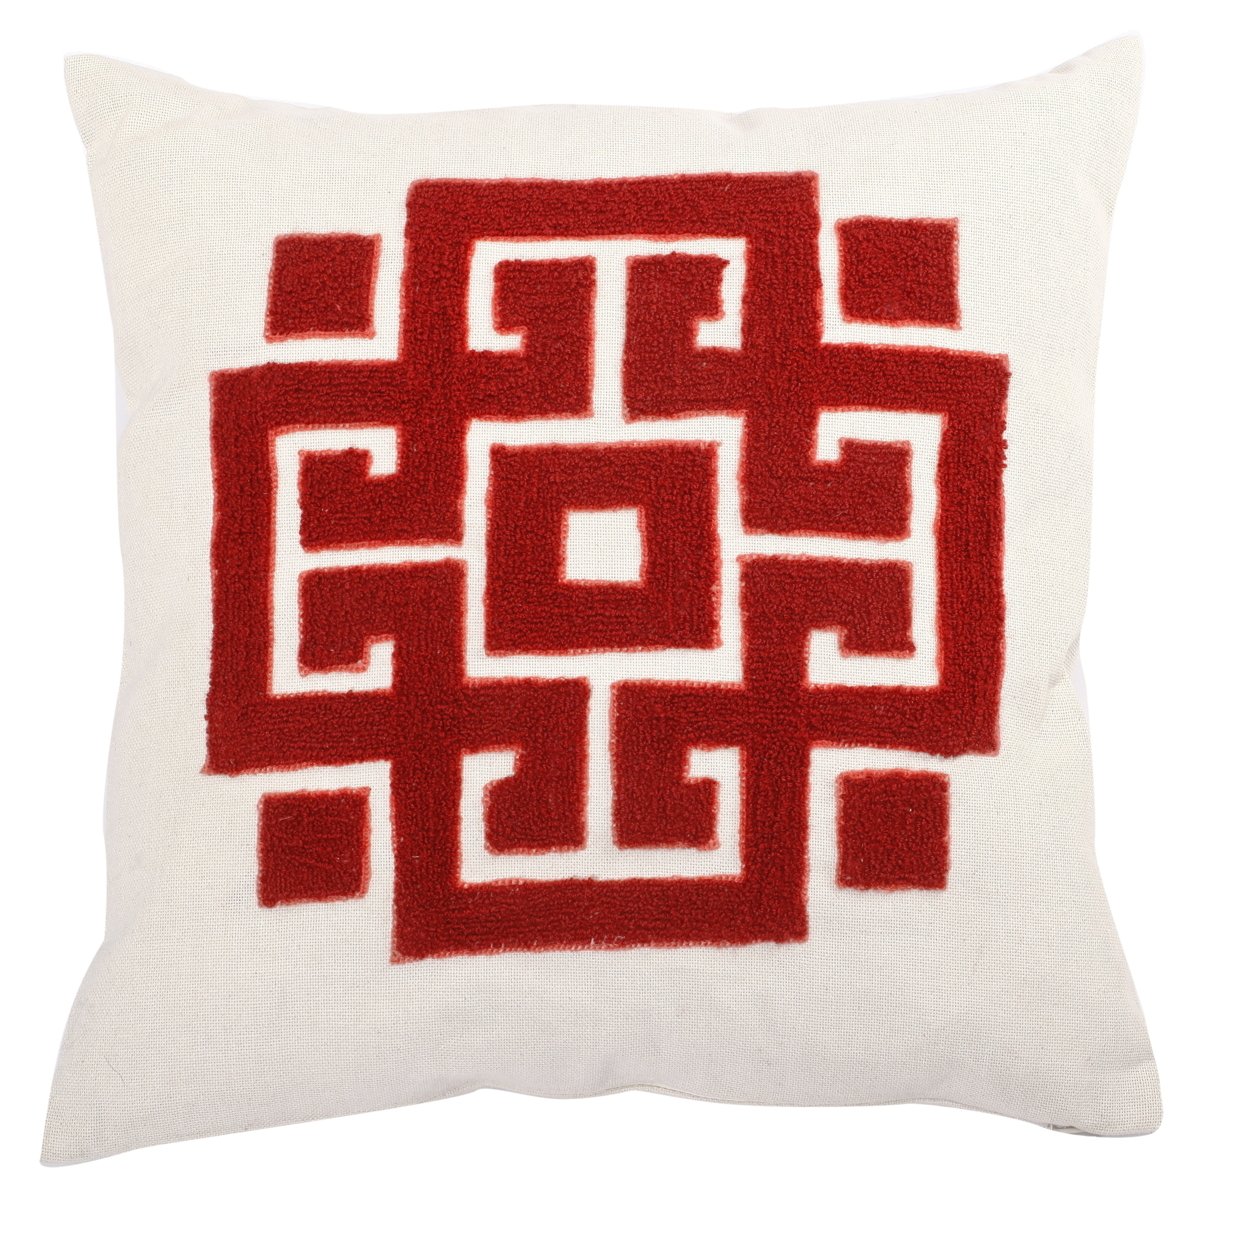 18 X 18 Inch Bergamo Embroidered Cotton Pillow, Set Of 2, White And Red- Saltoro Sherpi